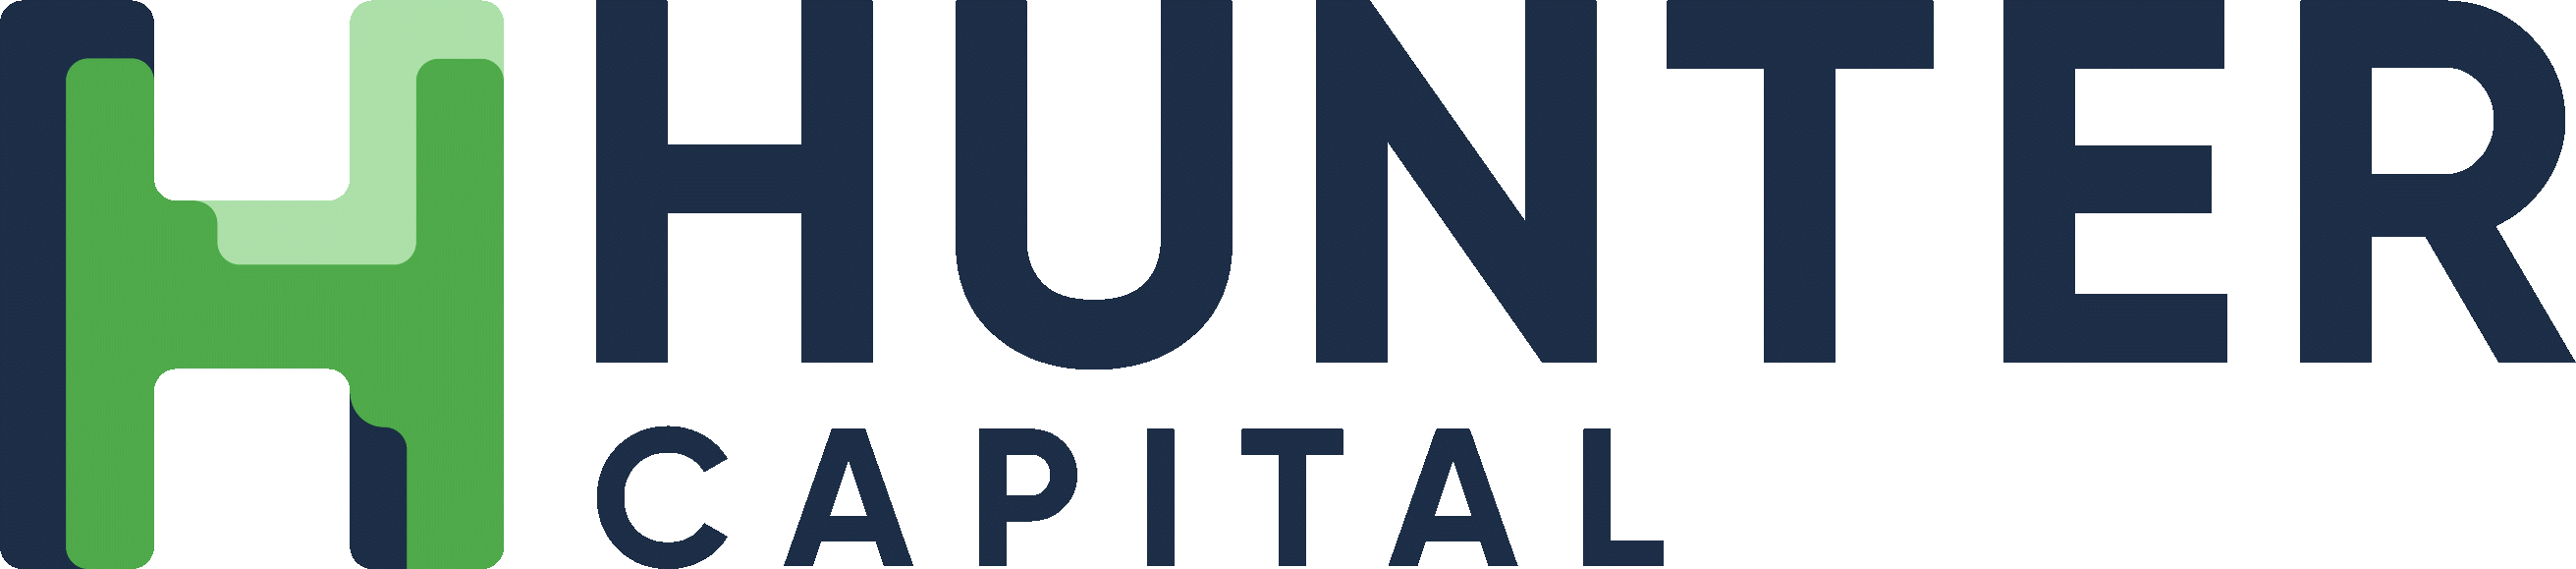 Hunter Capital AB Logotyp